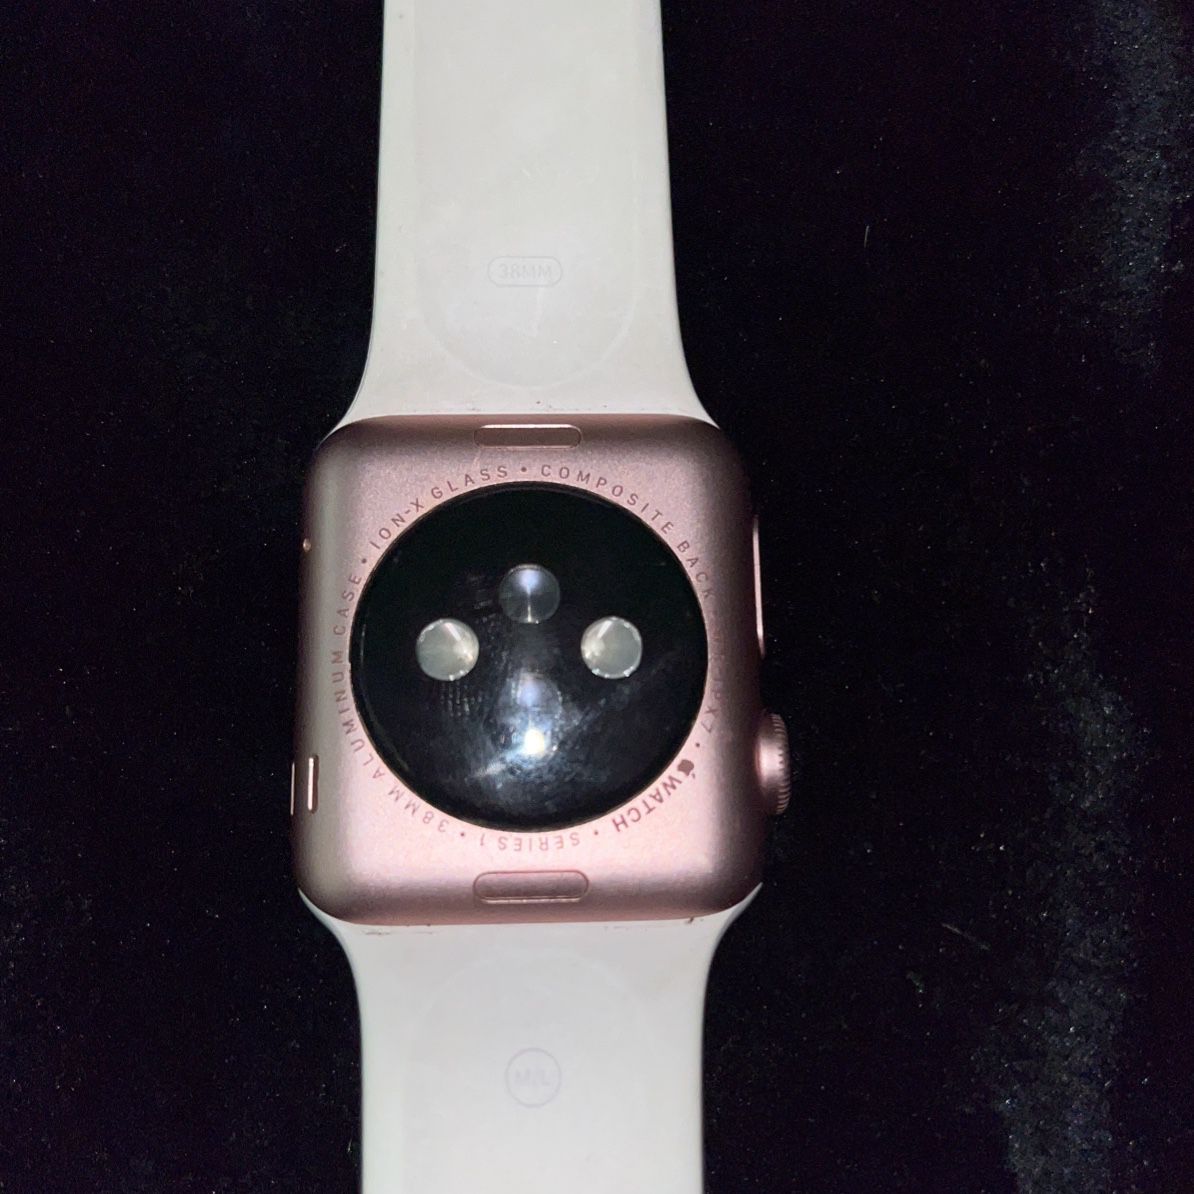 Apple Watch Series 1 